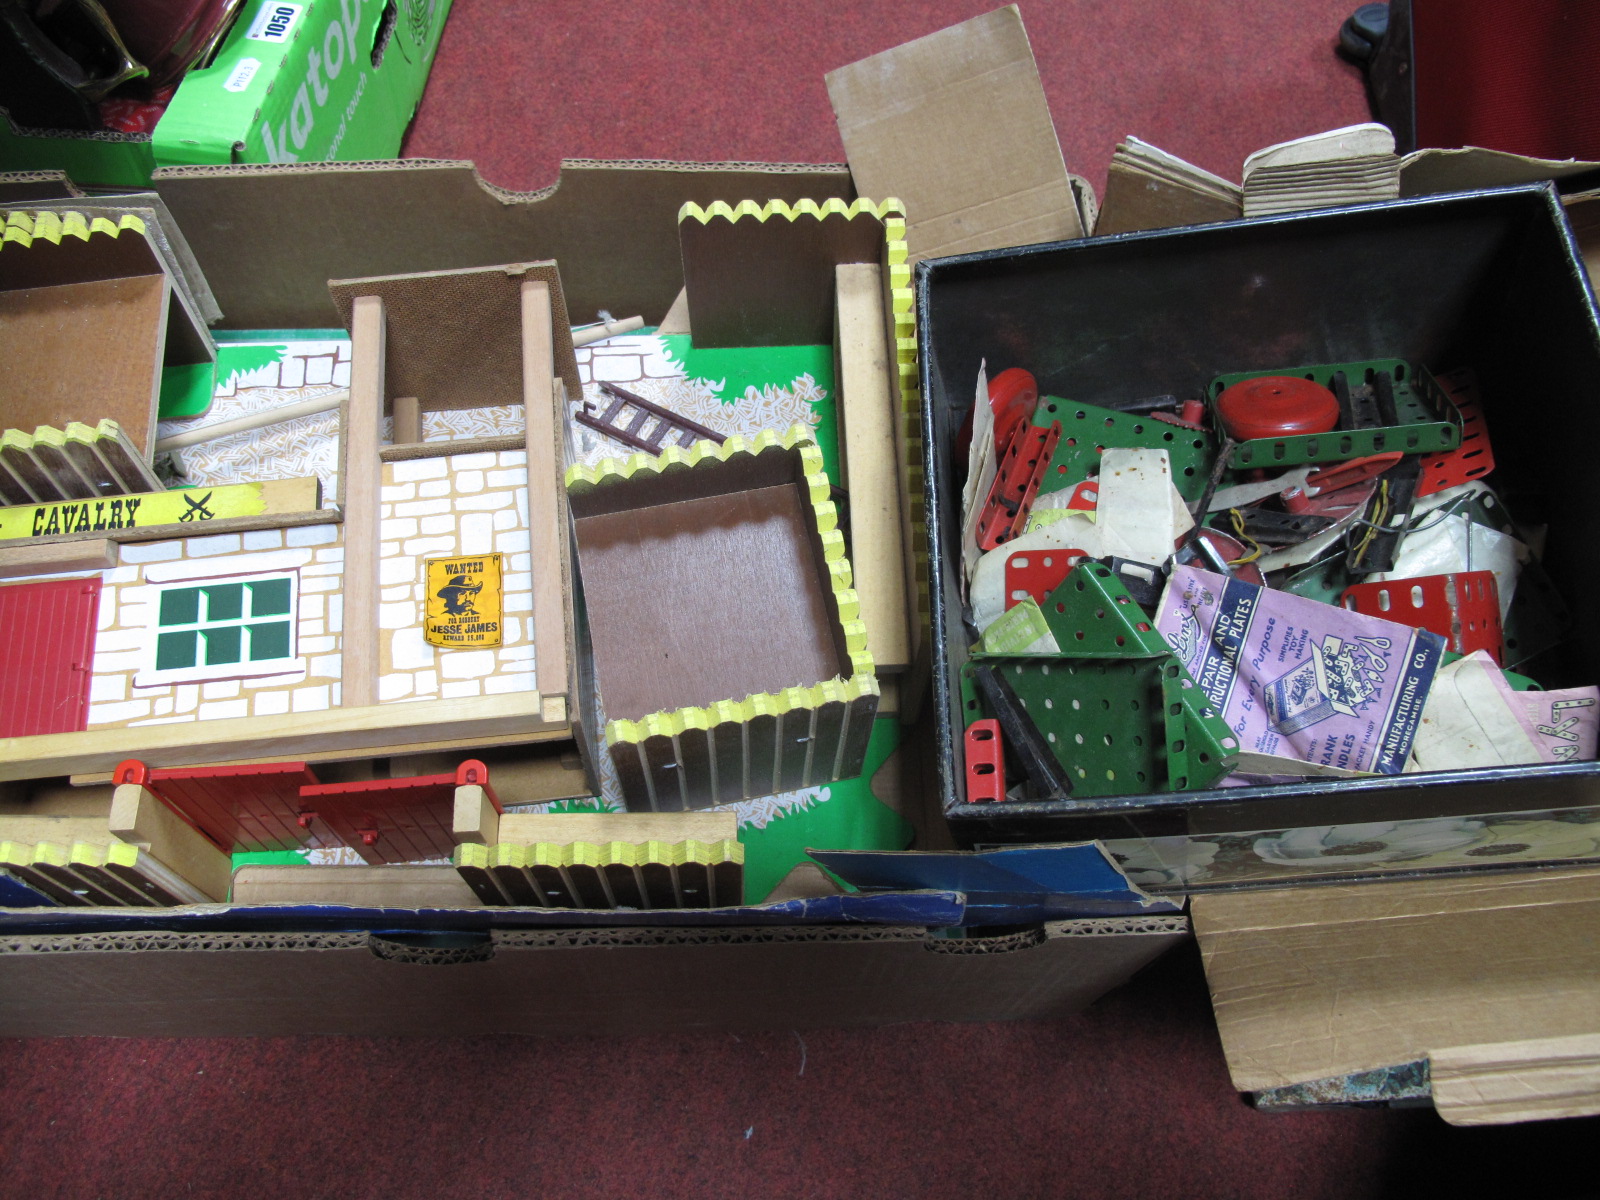 A Boxaling Gypsy Caravan Model Wooden Kit, Casdon toy hospital bed, Toyworks wooden toy fort